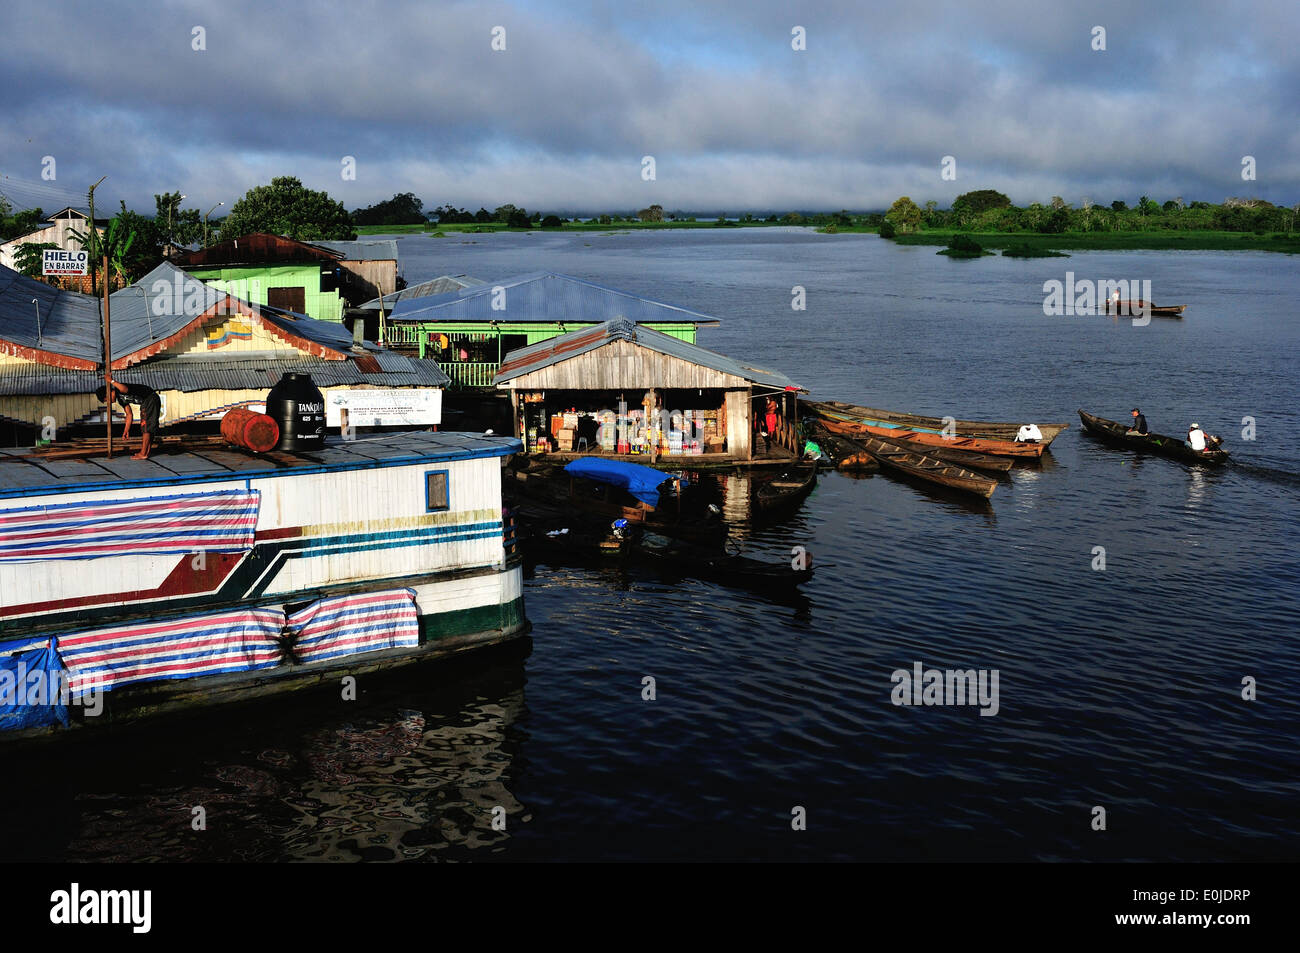 San pablo peru hi-res stock photography and images - Alamy